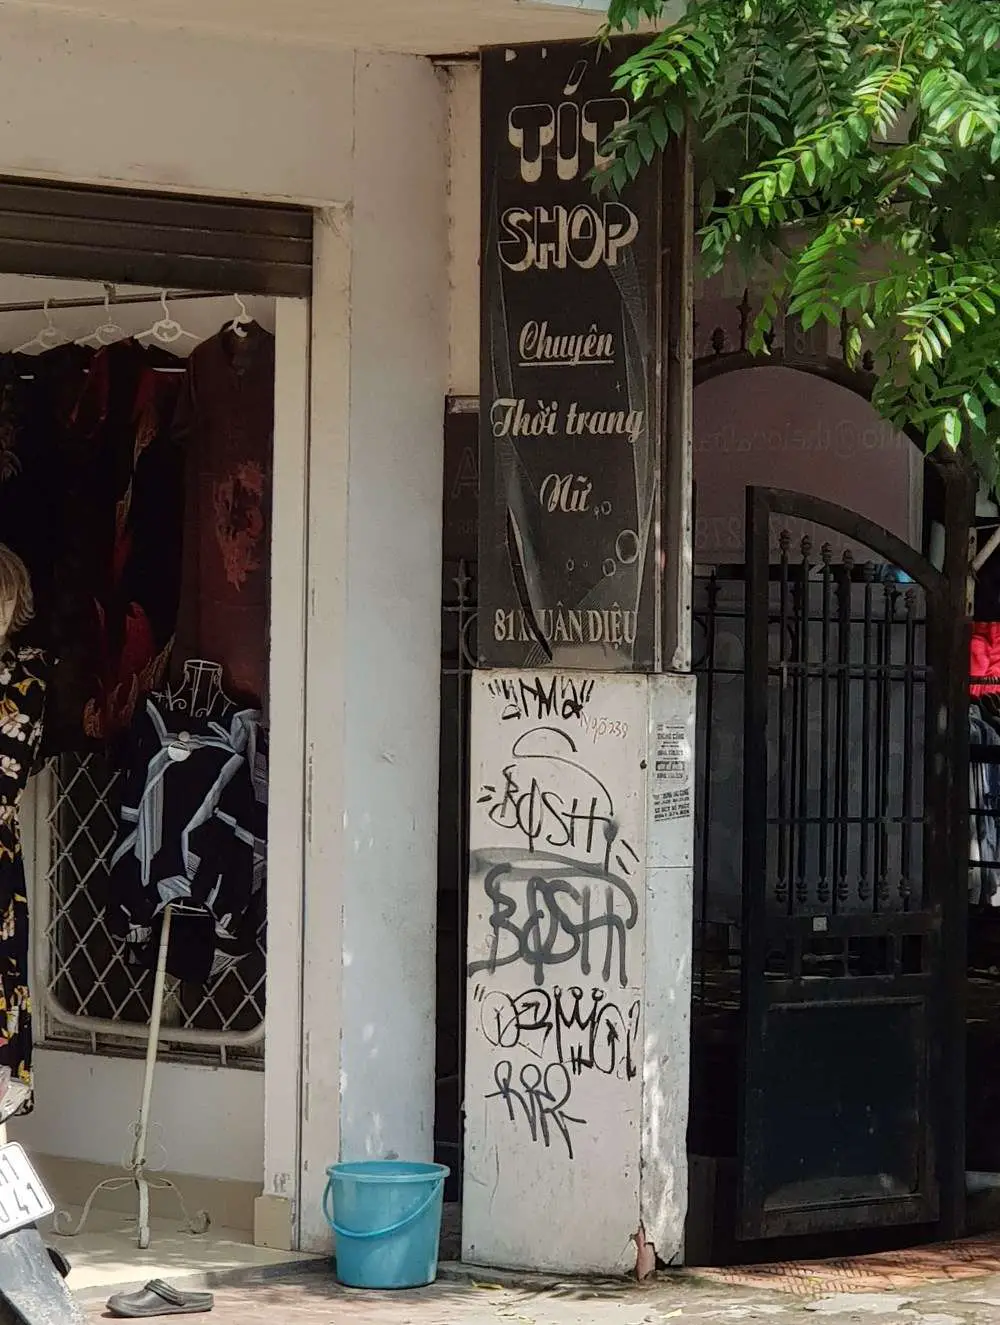 Funny Shop Names: Tit Shop in Vietnam | The Travel Tart Blog